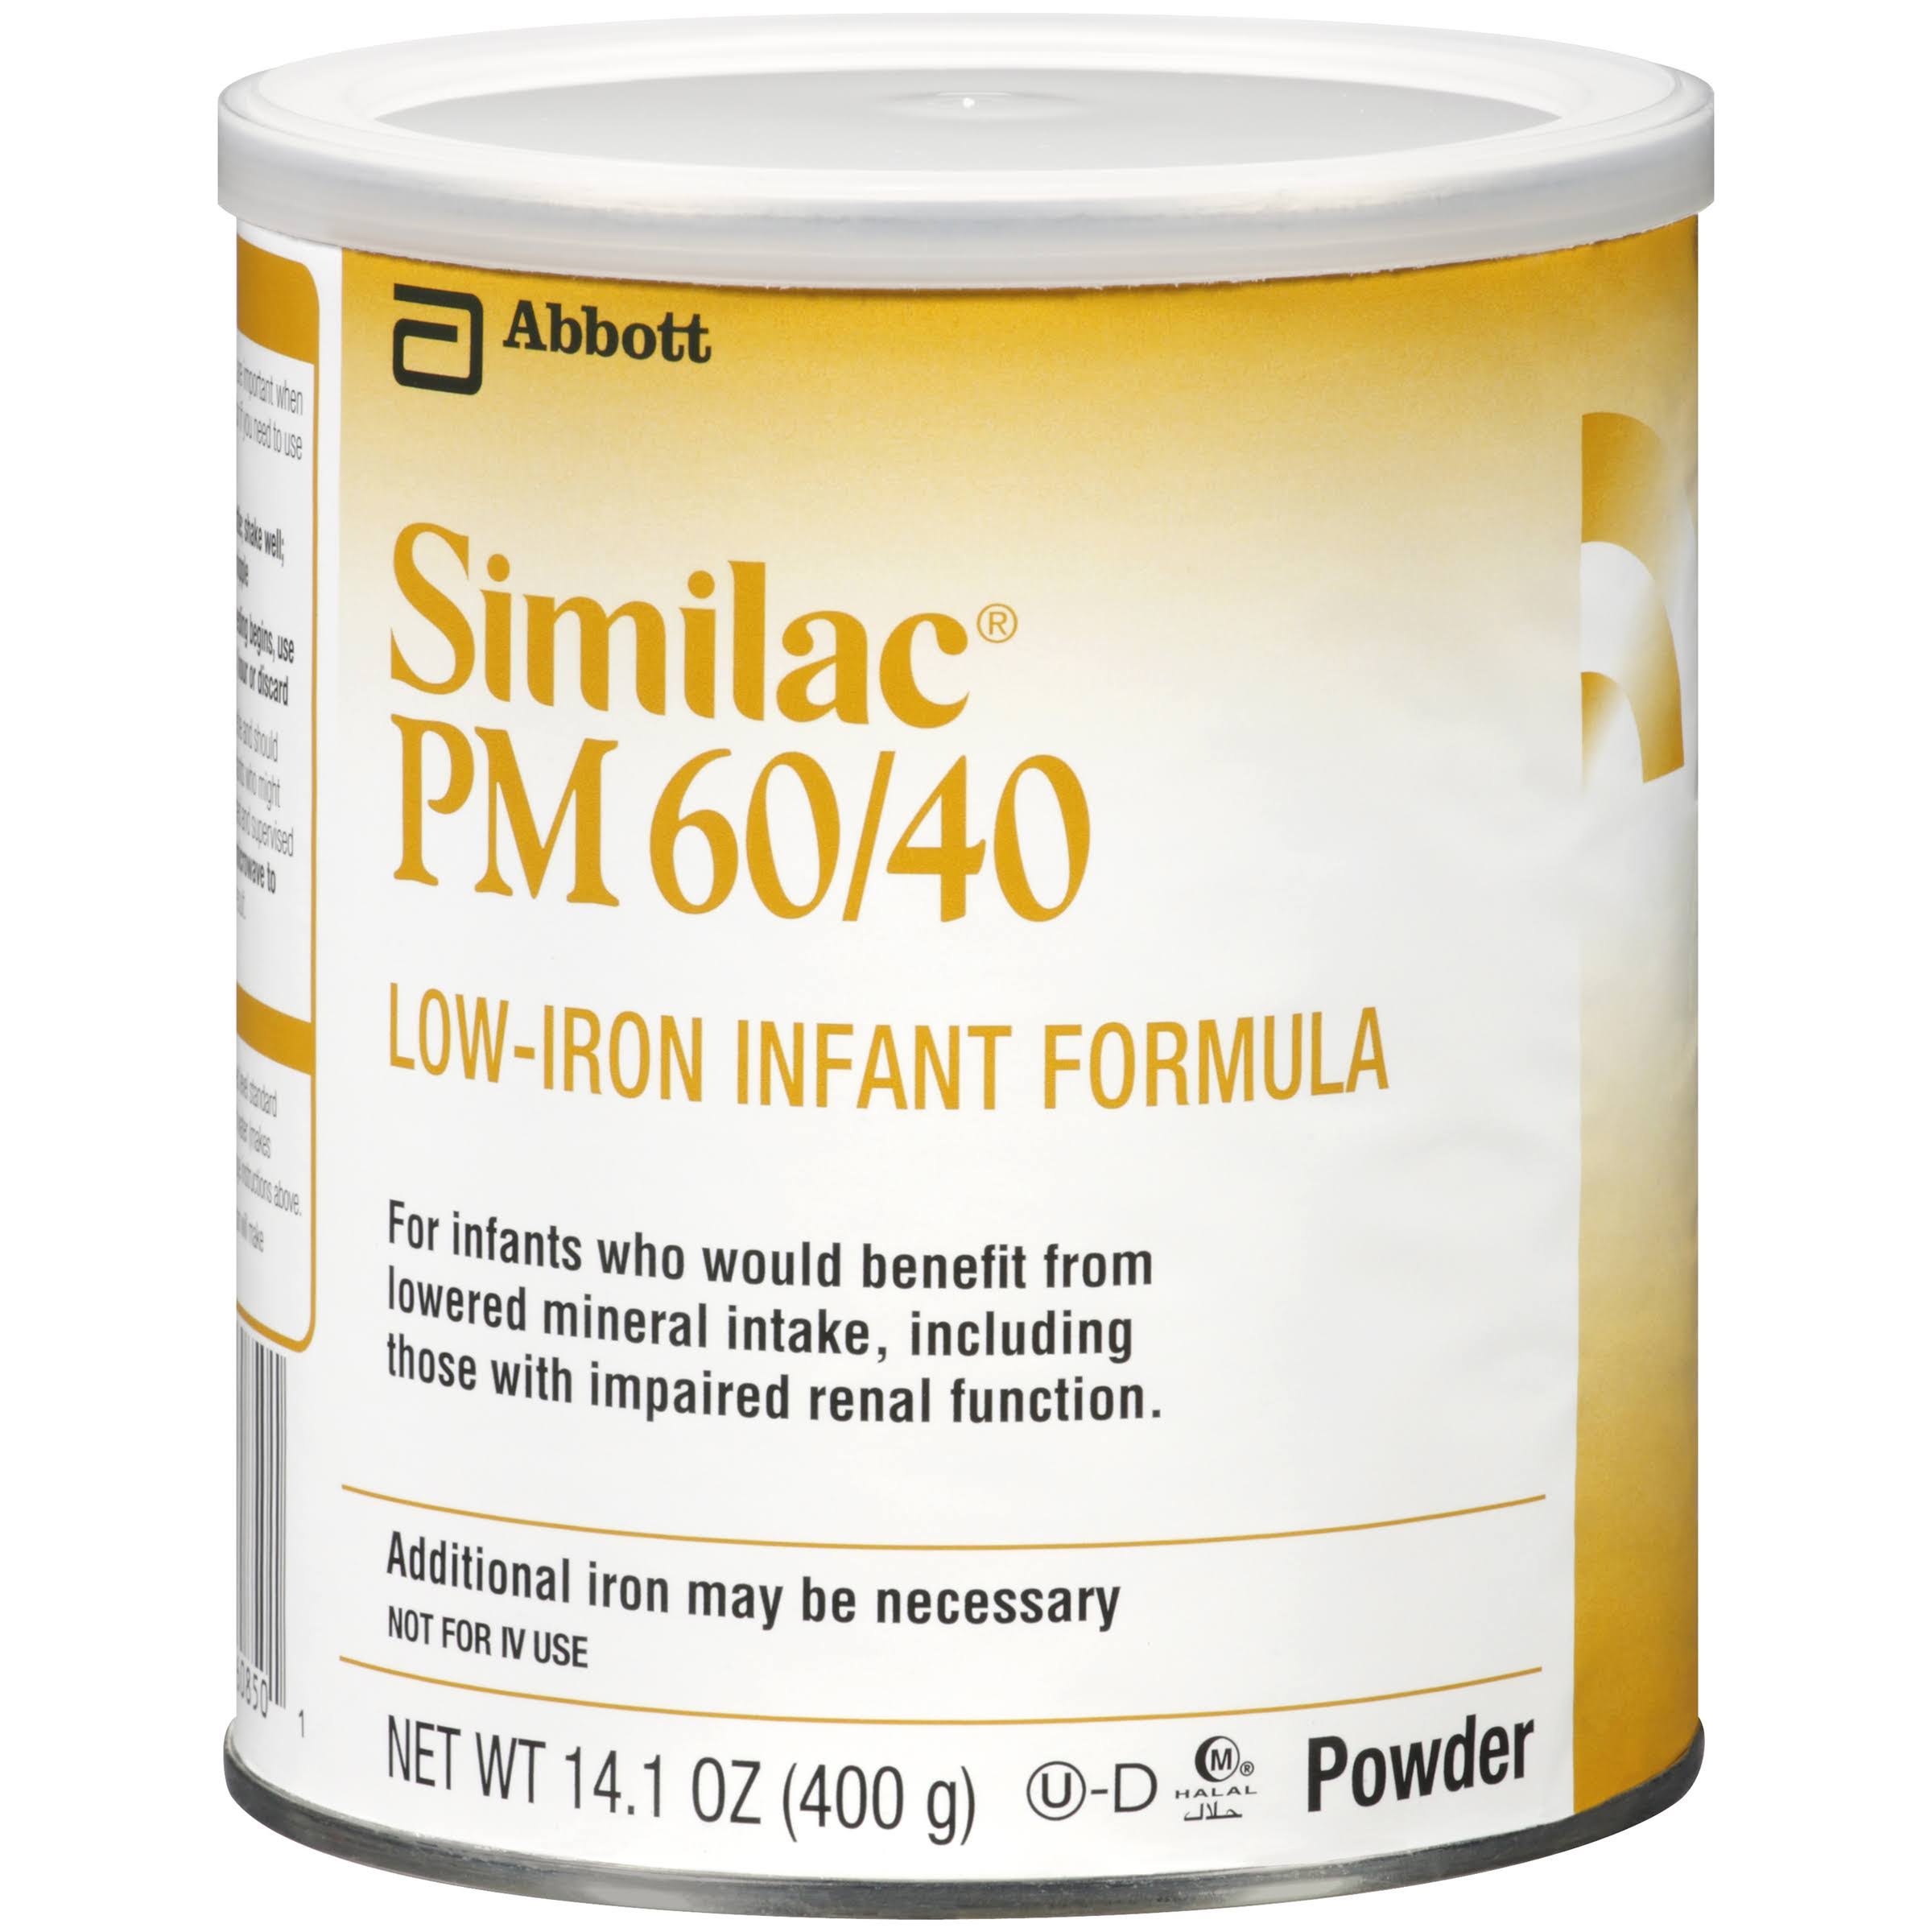 Similac PM 60/40 Low-Iron Infant Formula Powder - 14.10oz